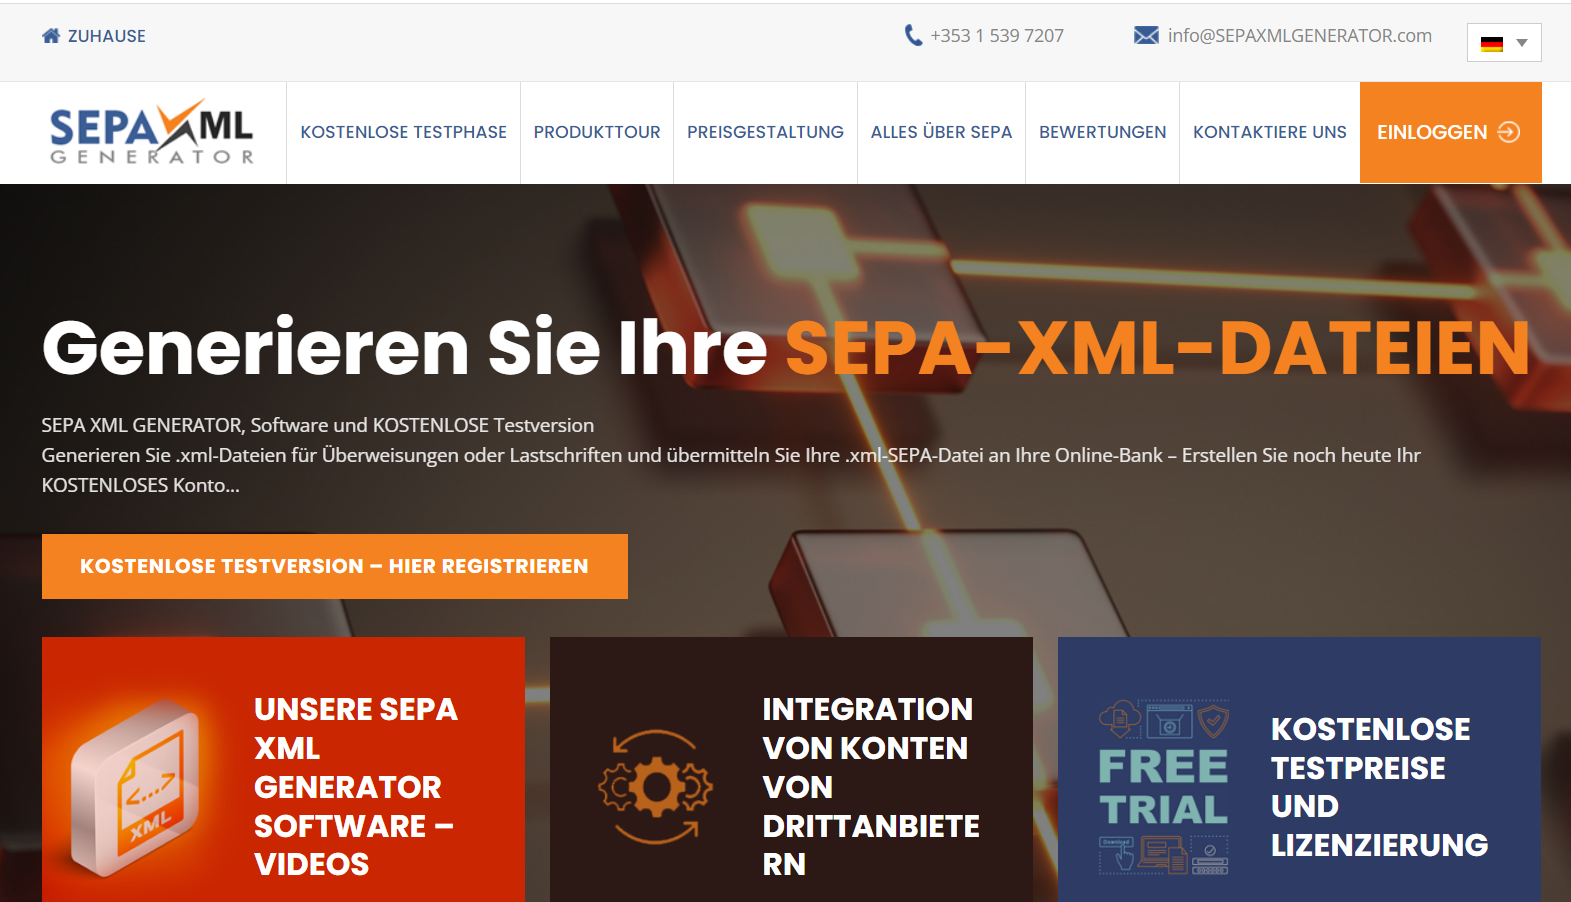 SEPA XML GENERATOR ora in tedesco